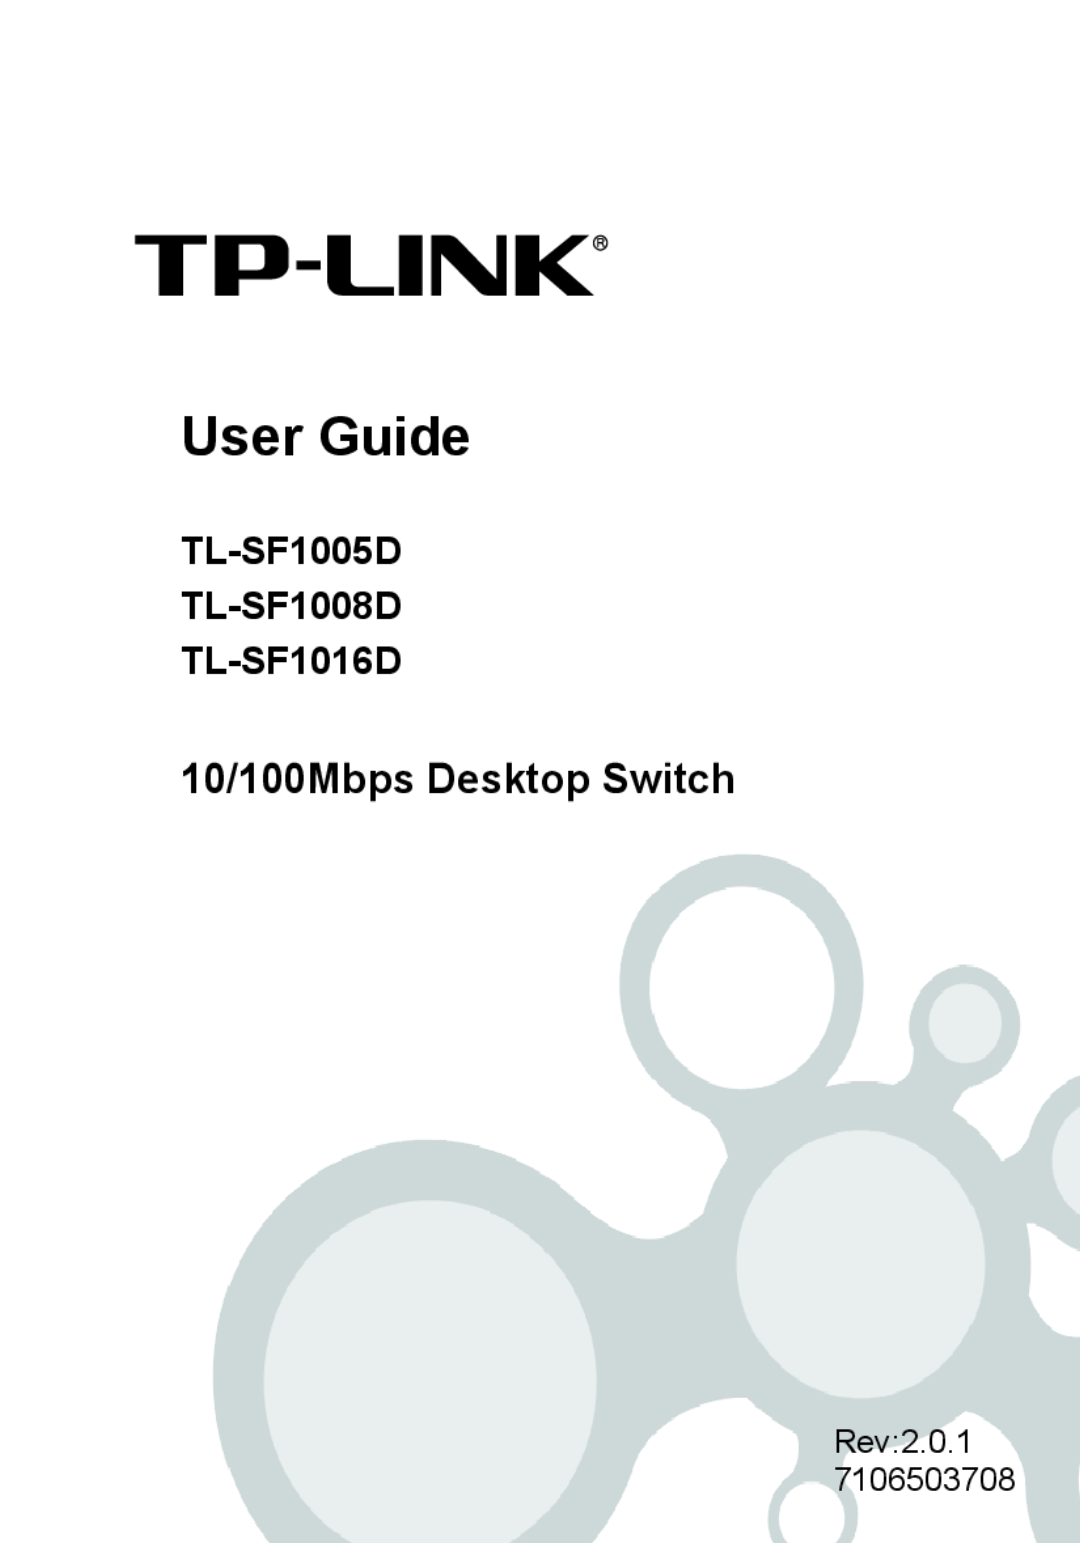 TP-Link manual TL-SF1005D TL-SF1008D TL-SF1016D, User Guide, 10/100Mbps Desktop Switch 